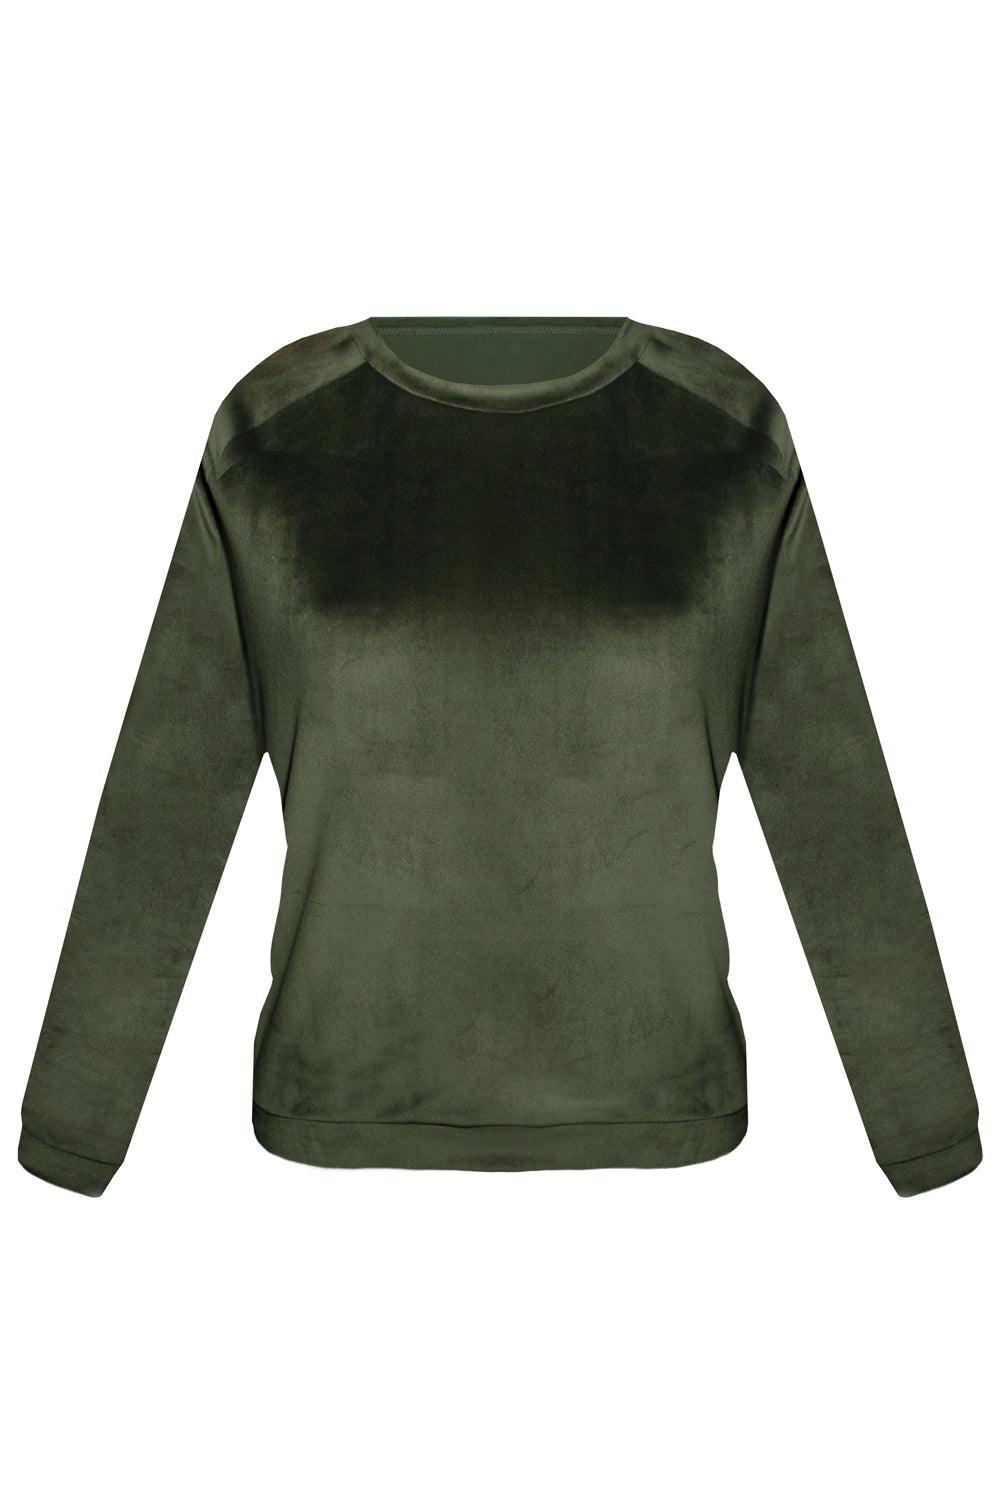 Foxy Olive sweater - Sweater by yesUndress. Shop on yesUndress